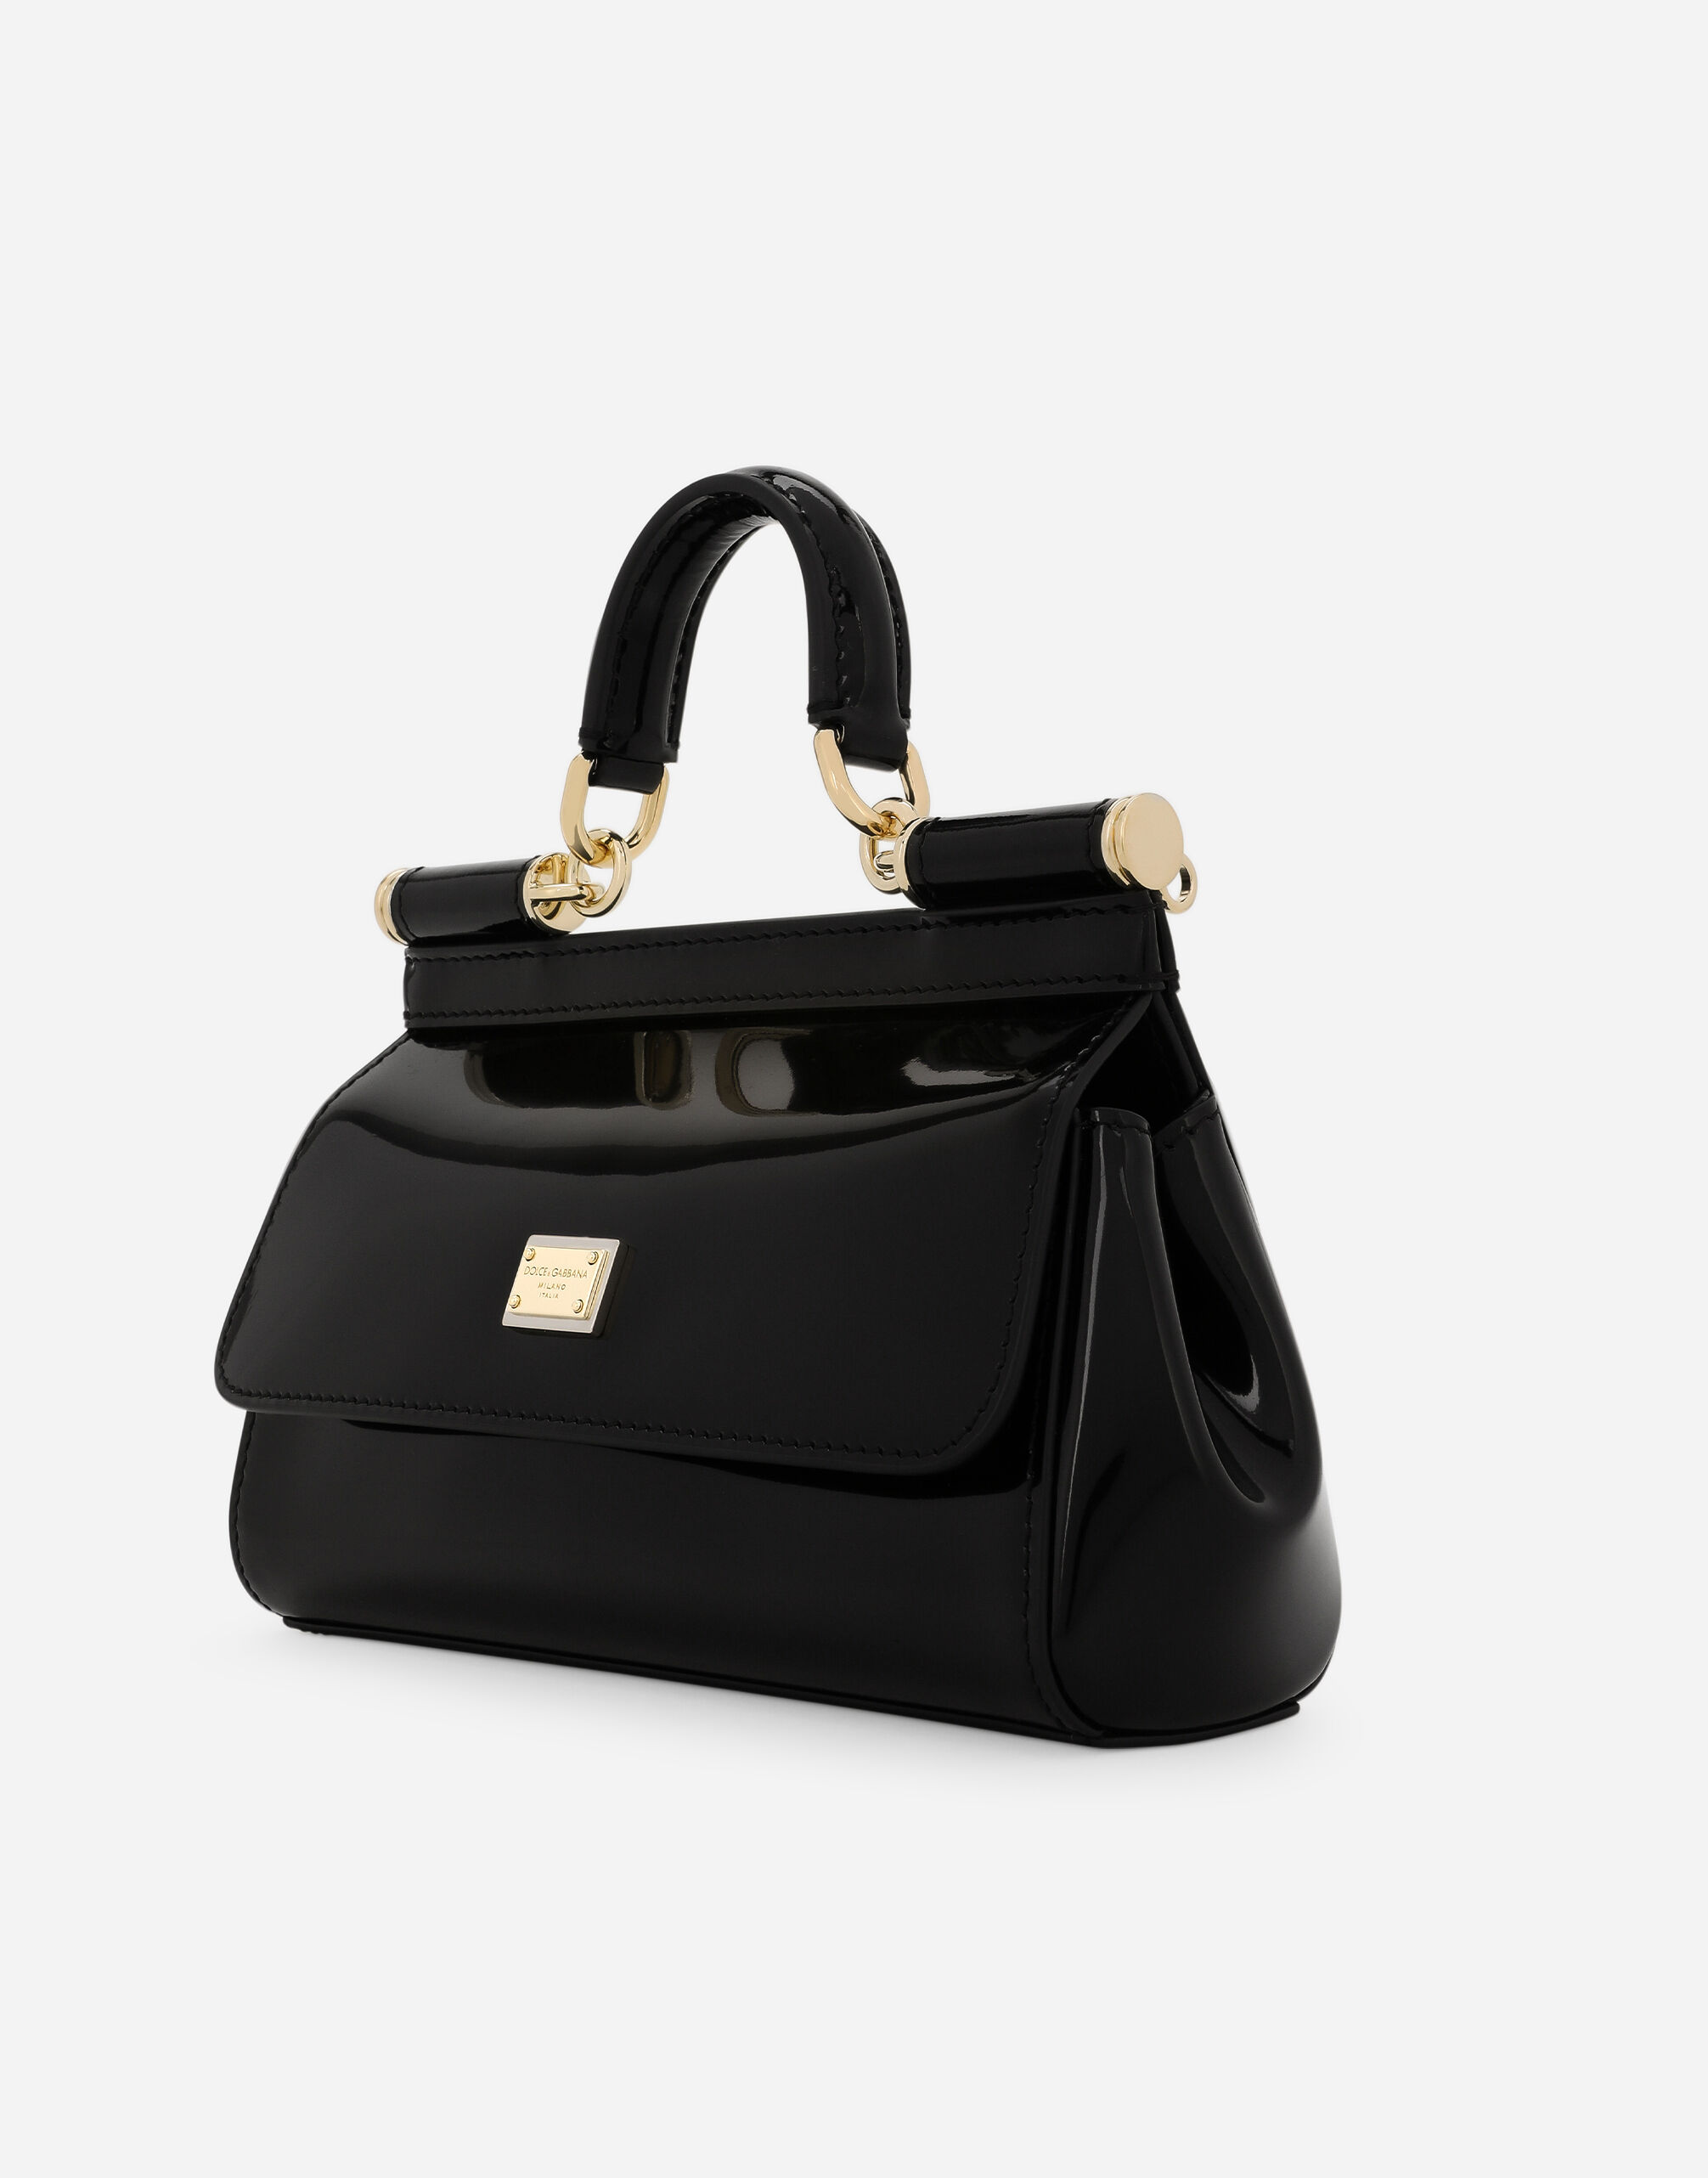 Dolce & Gabbana Handbags for Women - Vestiaire Collective